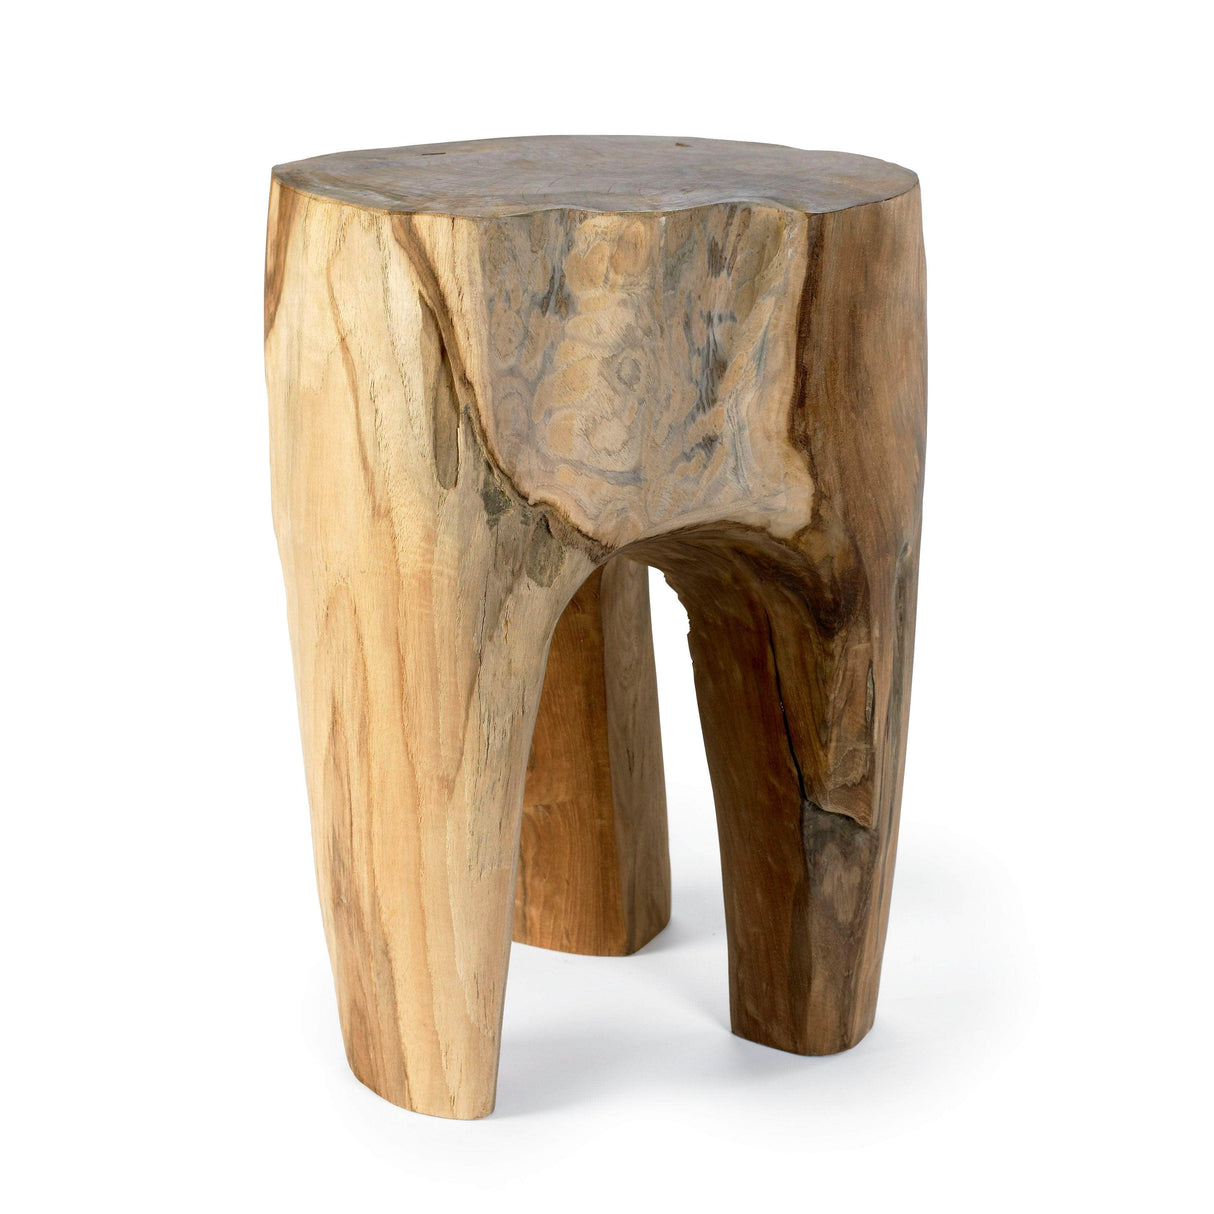 Nordal TEAK wooden stool, natural finish